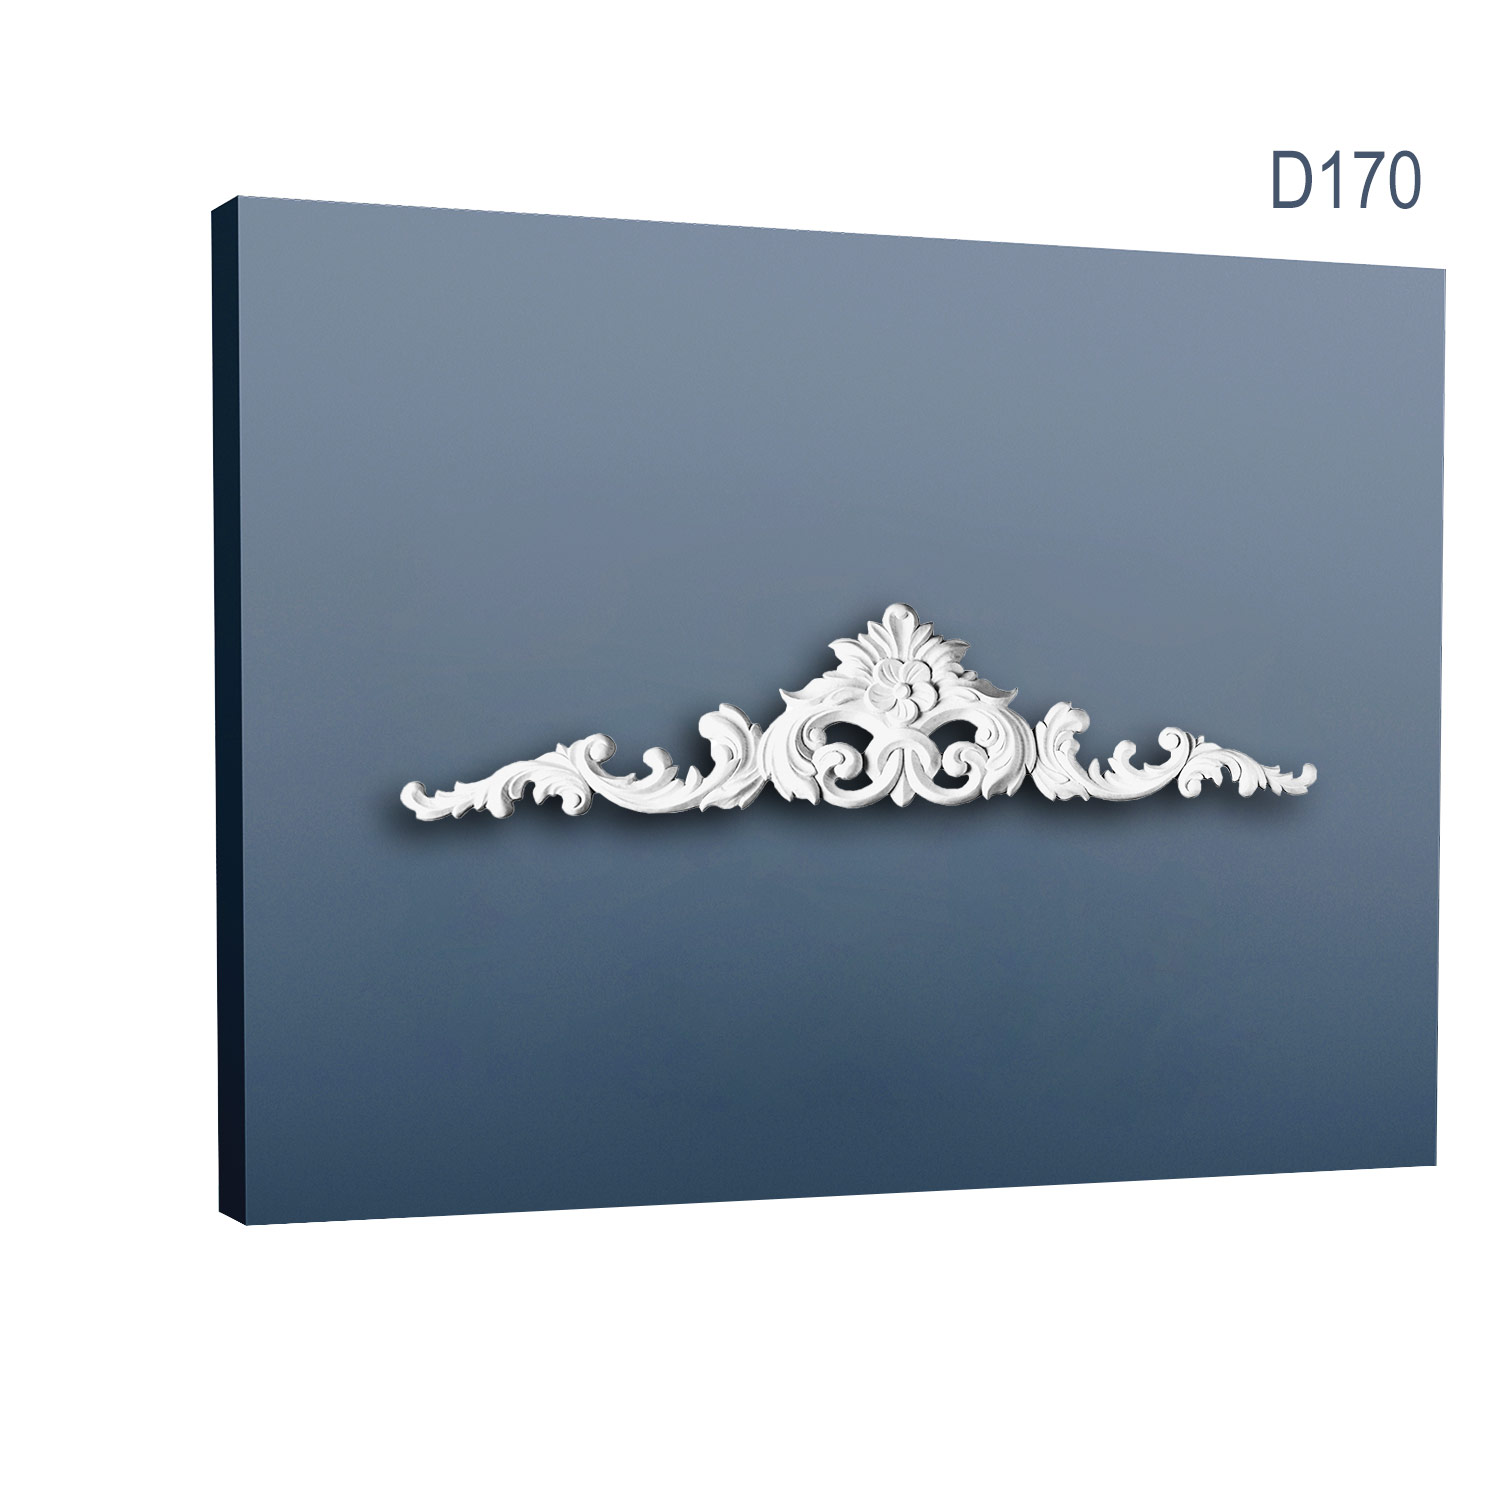 Fronton Luxxus D170, Dimensiuni: 105 X 24.5 X 3.2 cm, Orac Decor Orac Decor